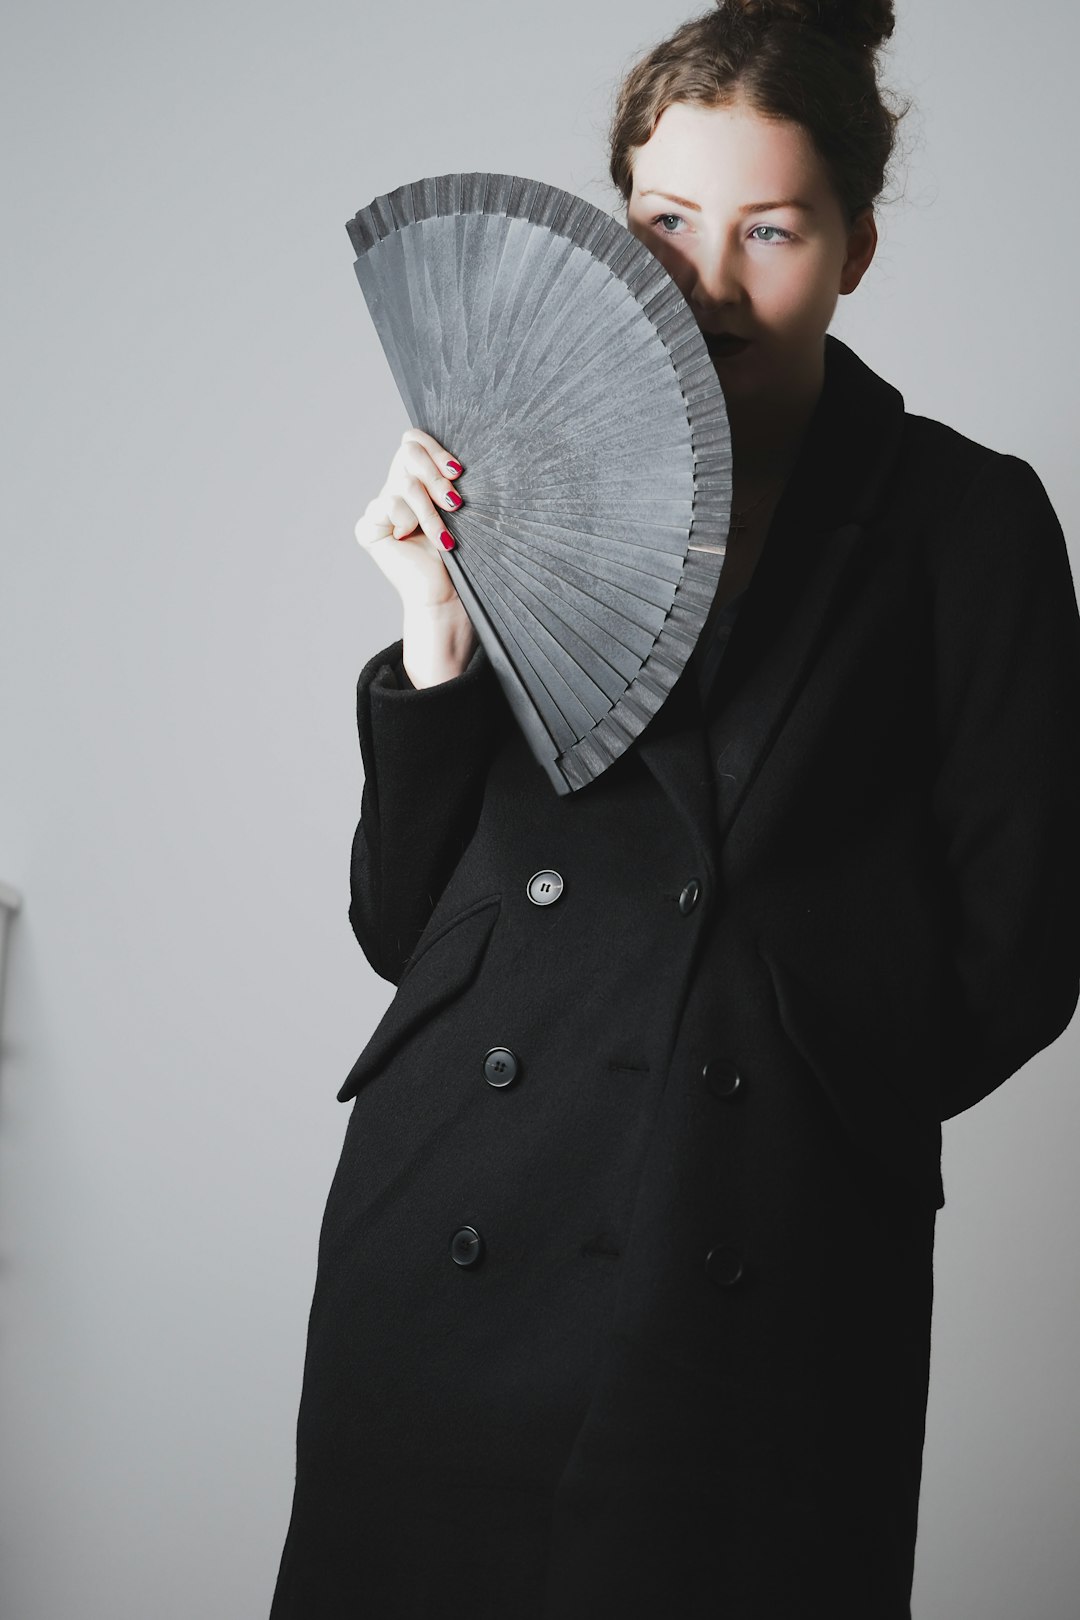 person in black coat holding gray hand fan